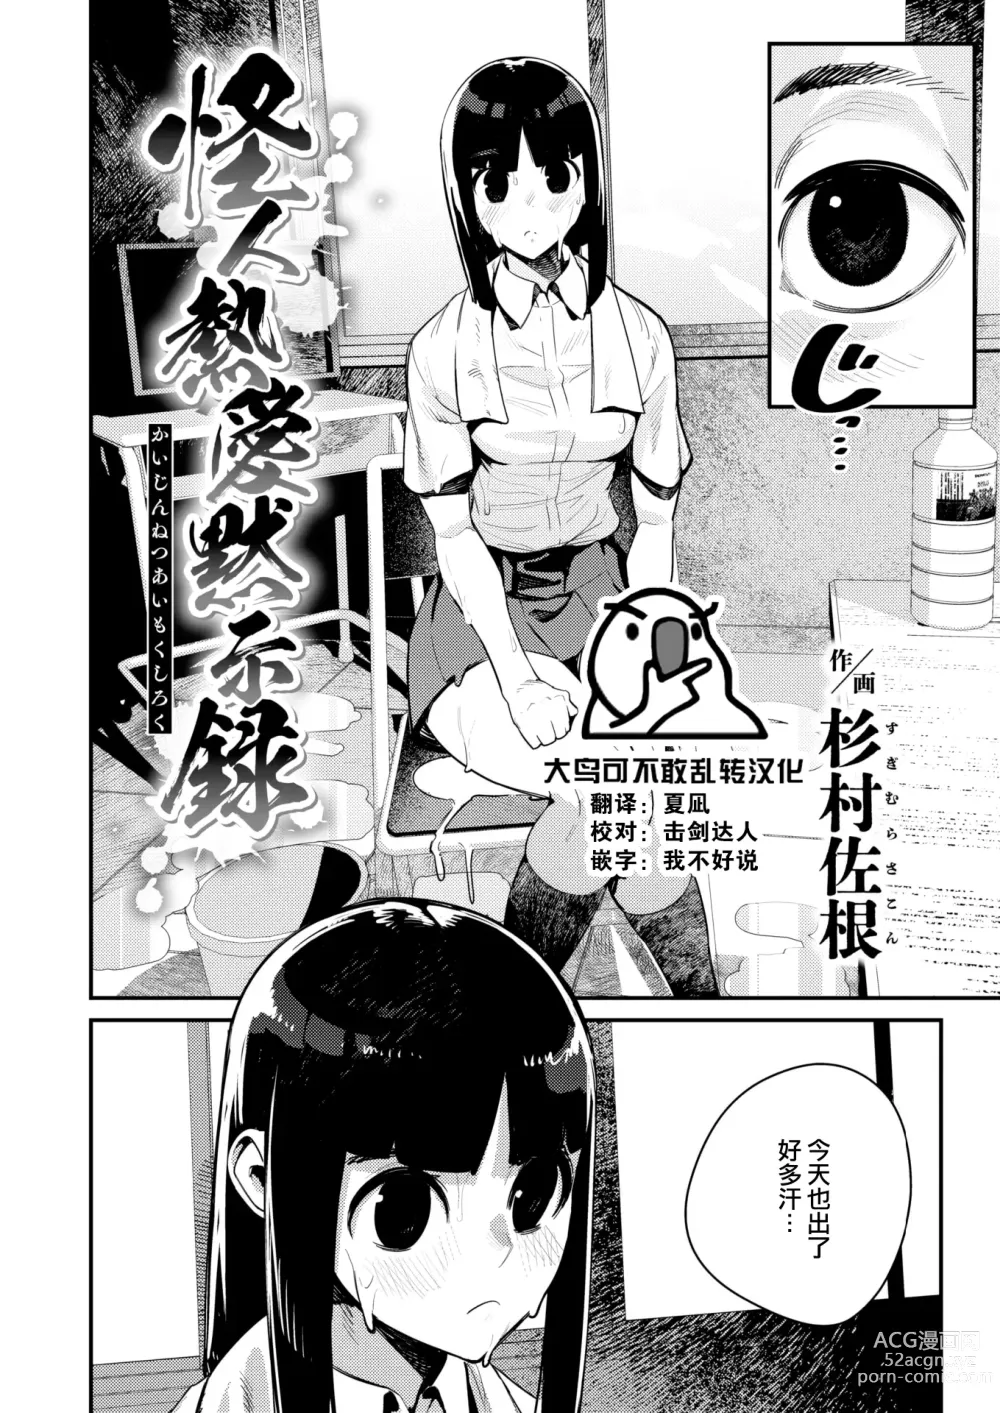 Page 1 of manga Kaijin Netsuai Mokushiroku